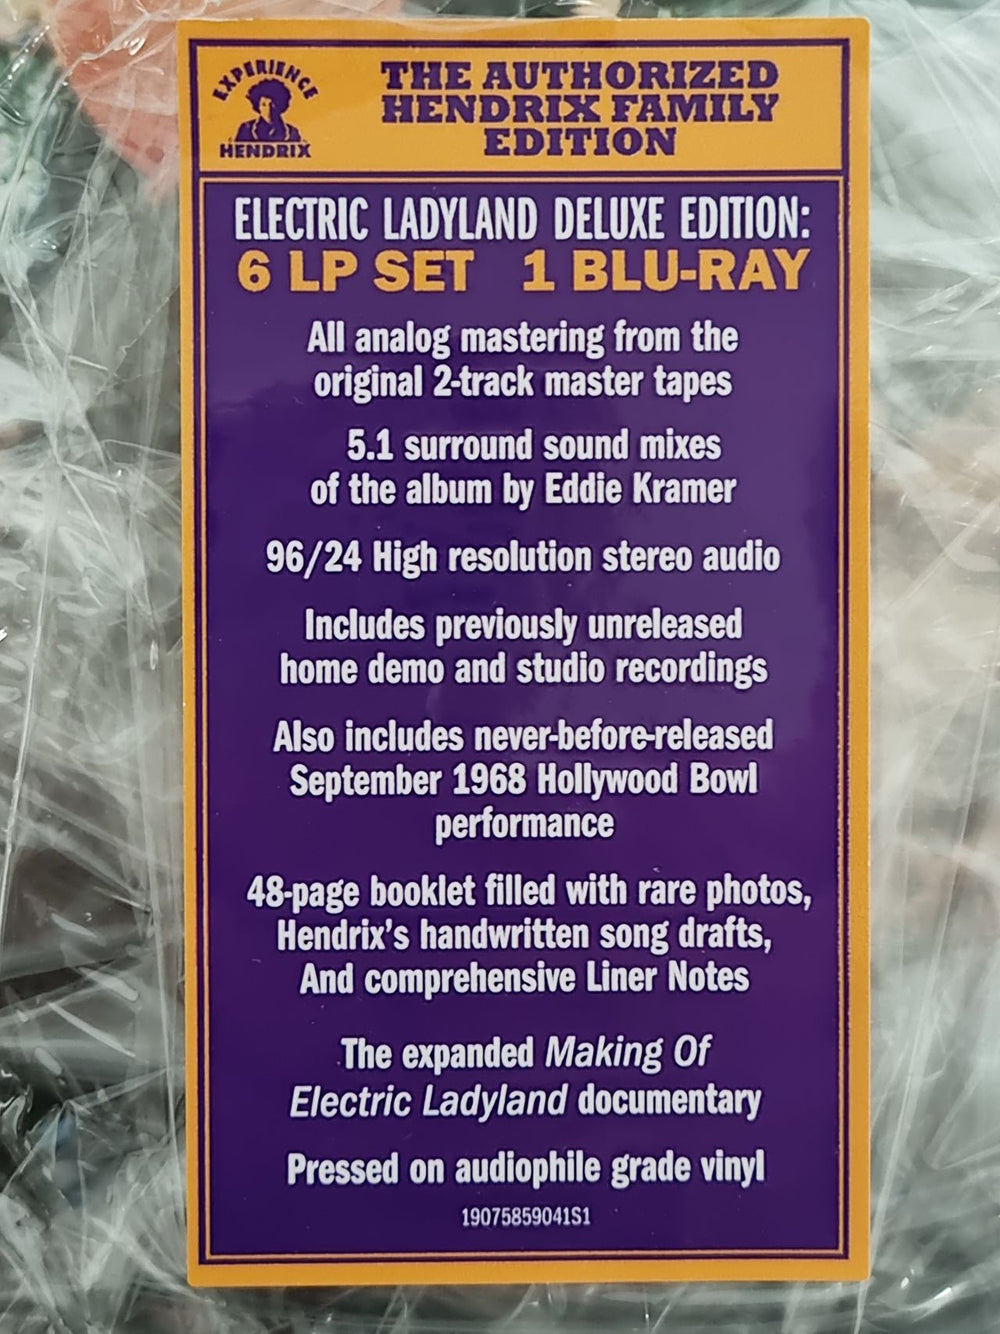 Jimi Hendrix Electric Ladyland - 6LP+1Blu-Ray Deluxe Edition UK Vinyl Box Set